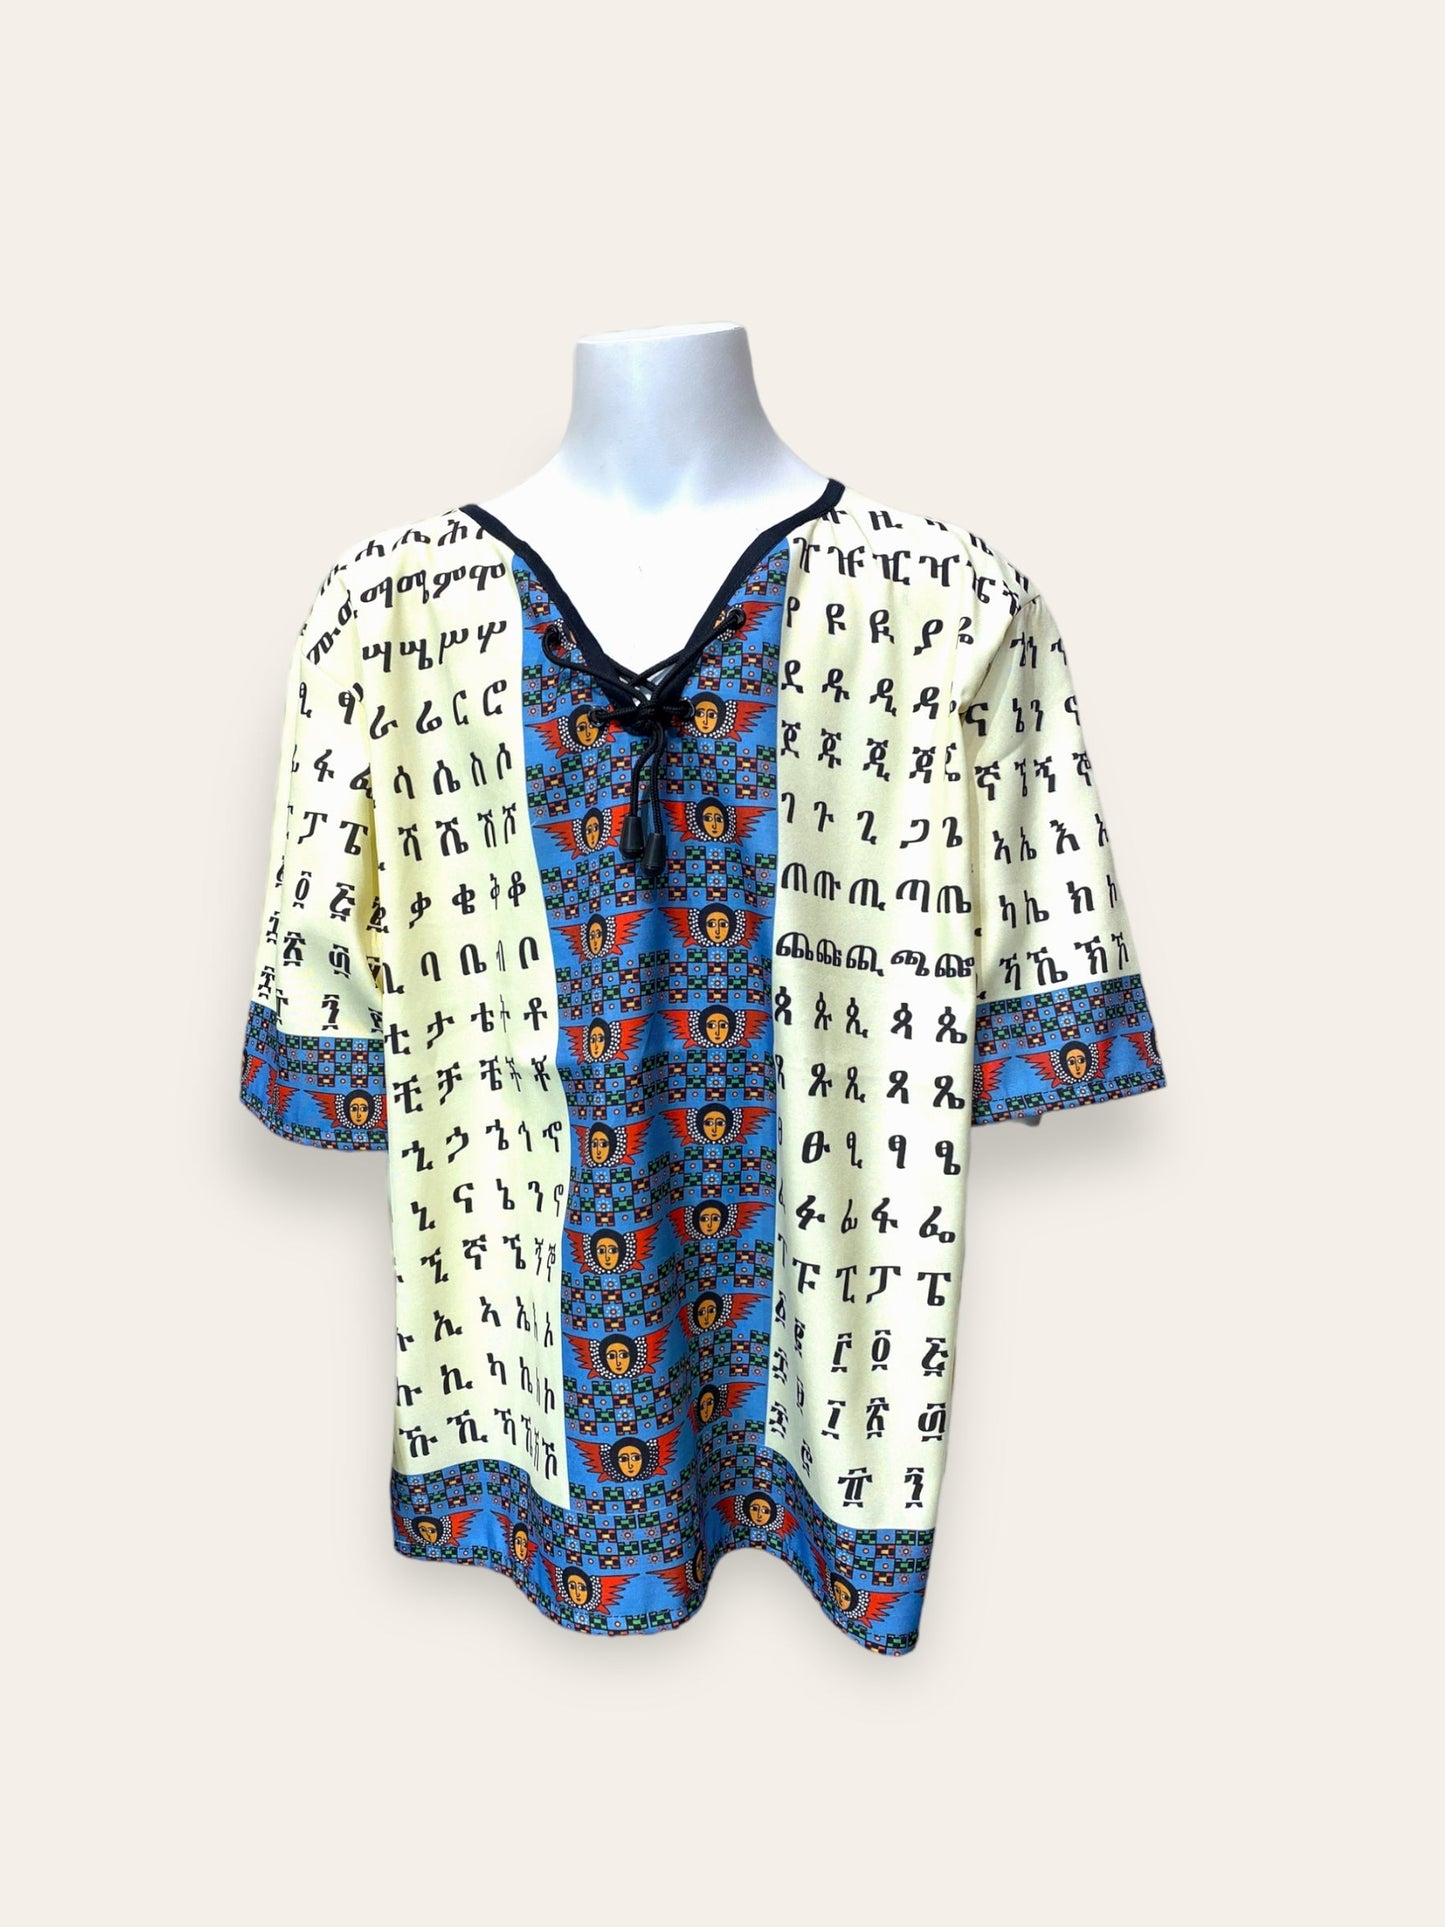 Traditional Eritrean/Ethiopian alphabet Shirt #4 Grmawit 